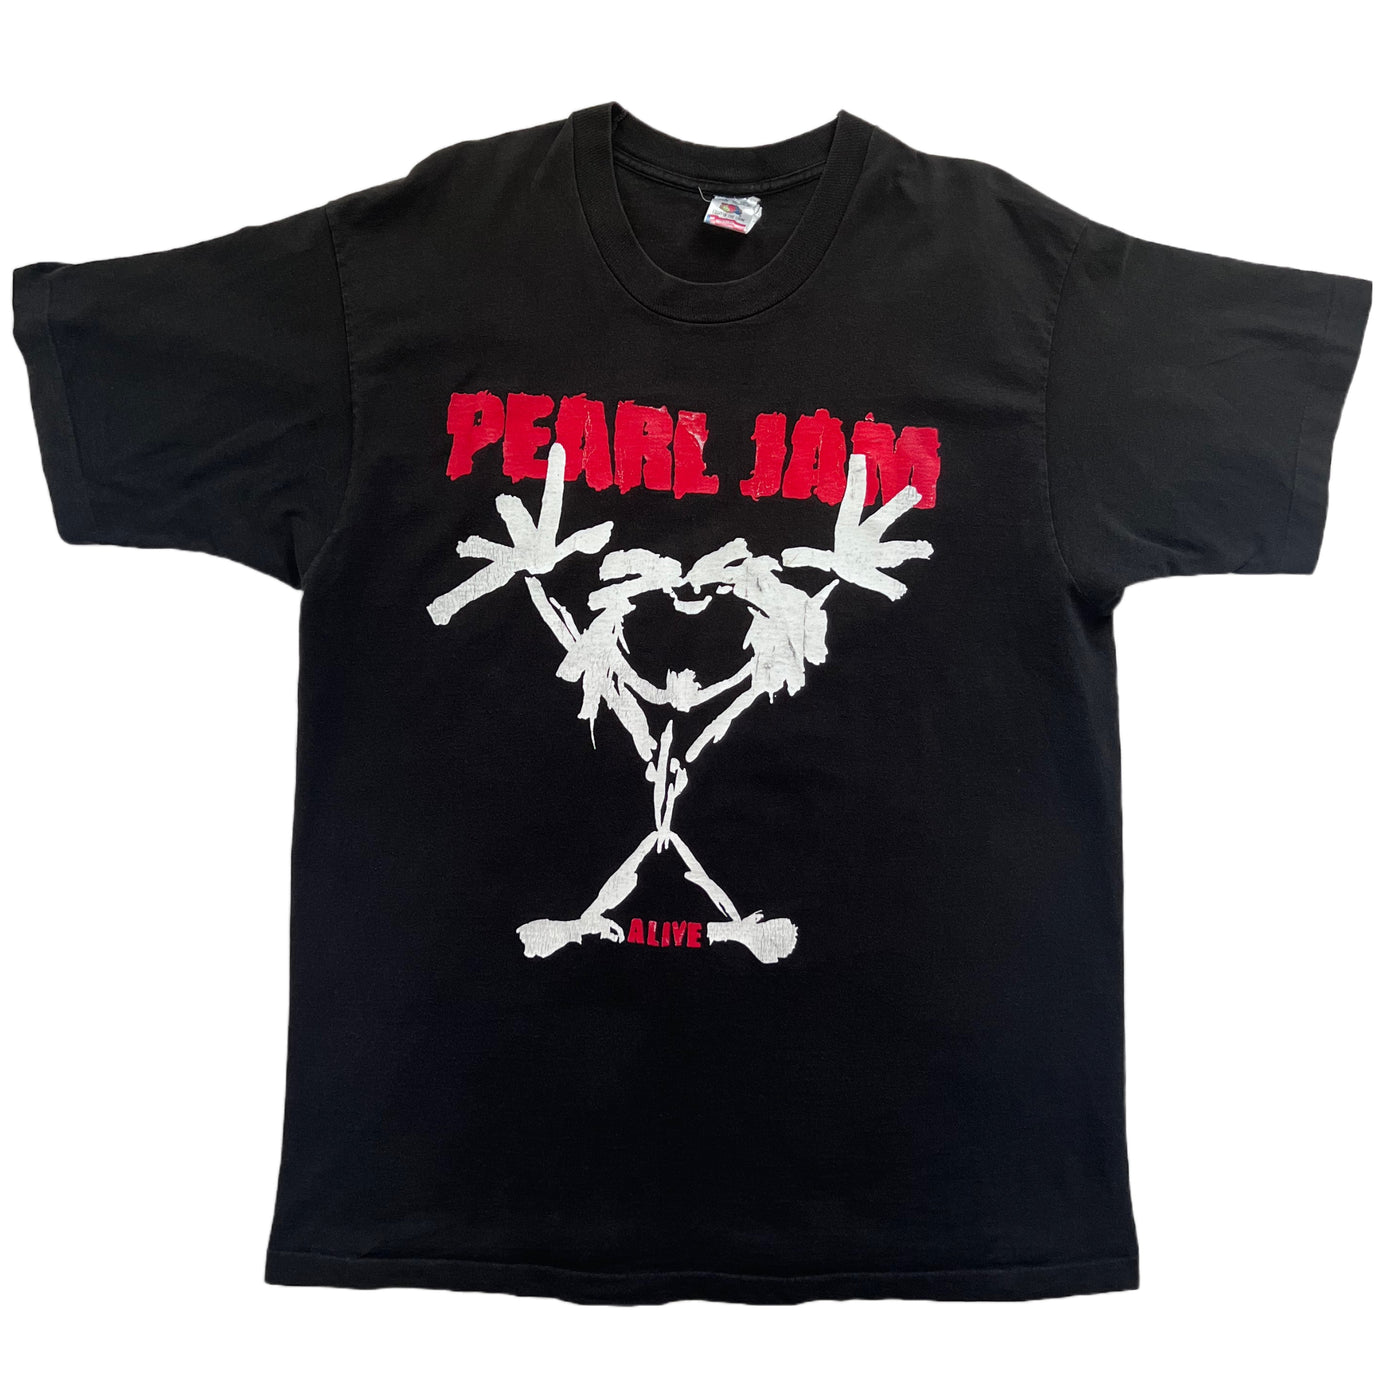 Vintage 1992 Pearl Jam Stick Man Tour Shirt. XL